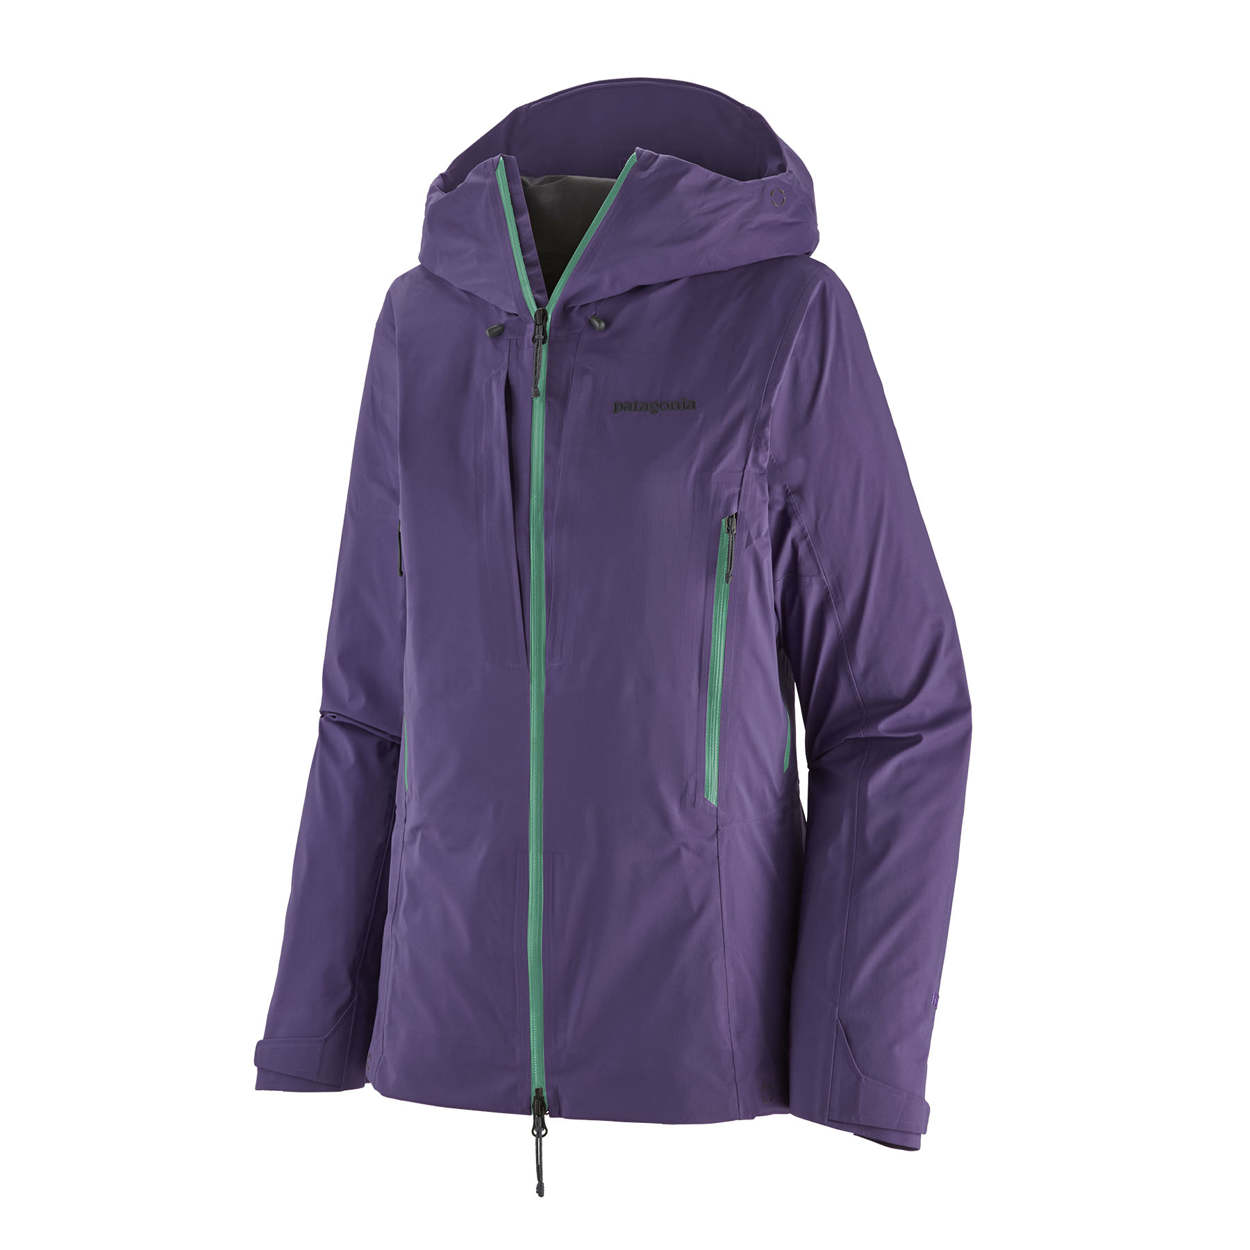 W's Dual Aspect Jacket, perennial purple